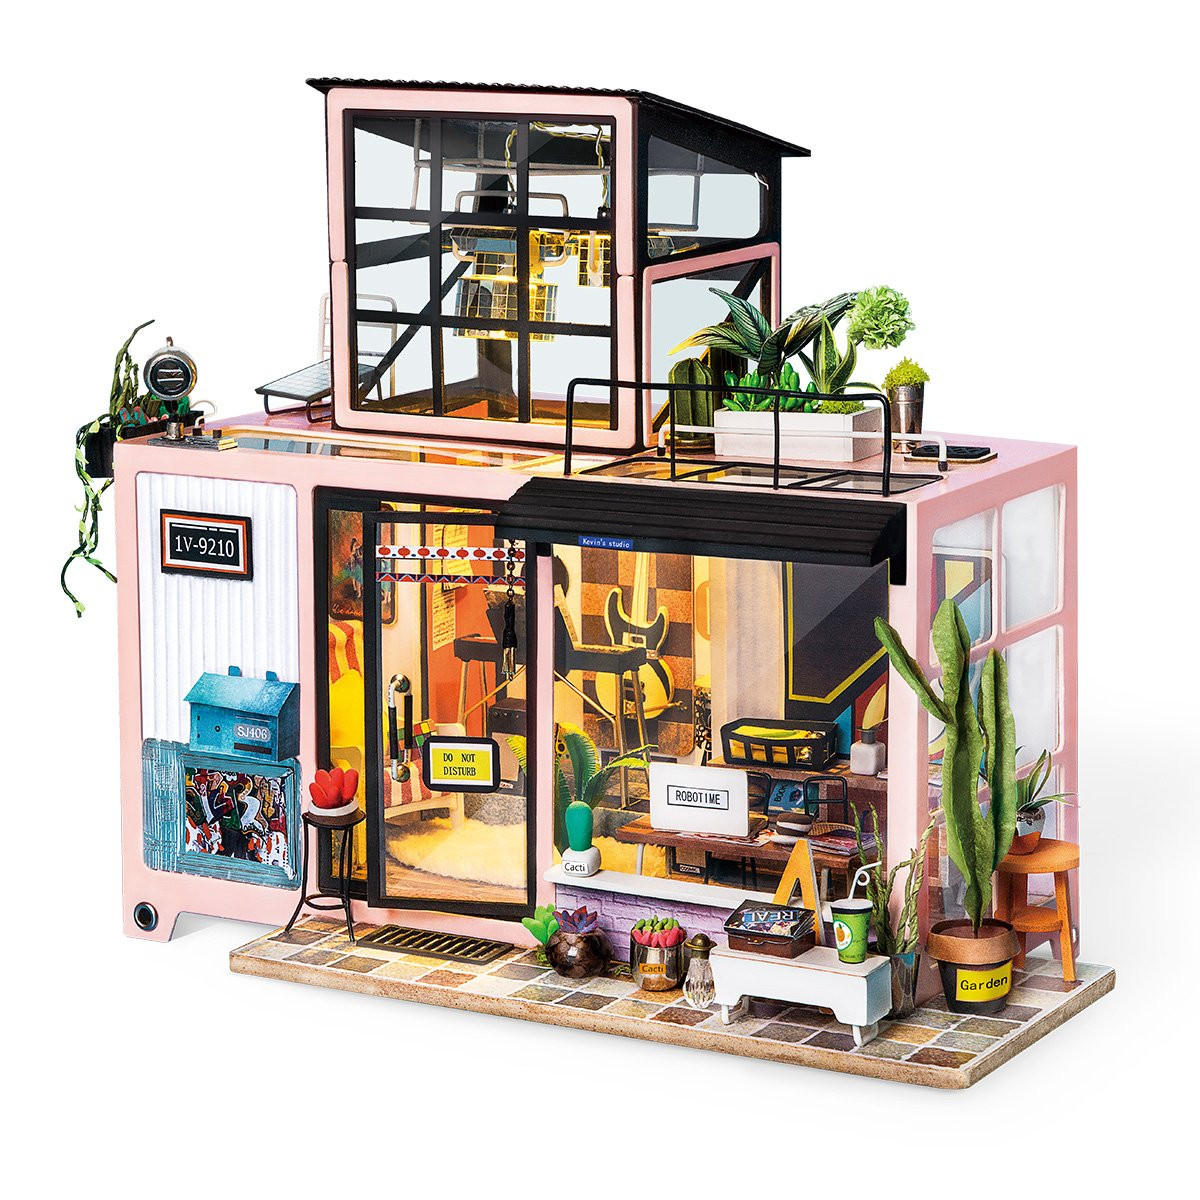 DIY Miniature Dollhouse Kit
 Kevin s Studio Robotime DIY Miniature Dollhouse Kit